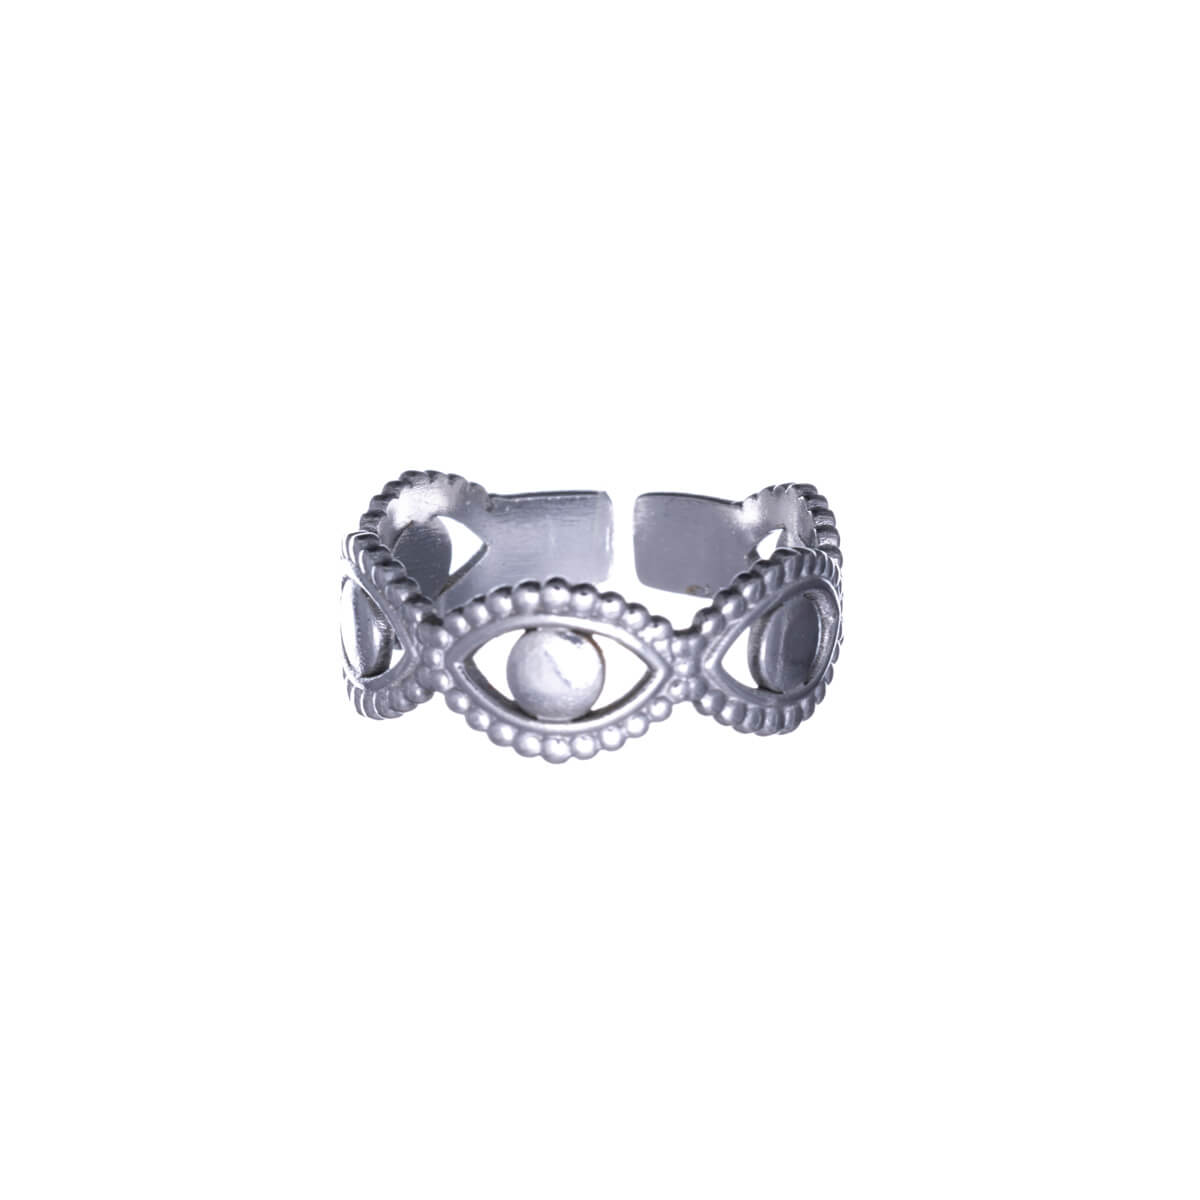 Evil eye ring single size ring (Steel 316L)